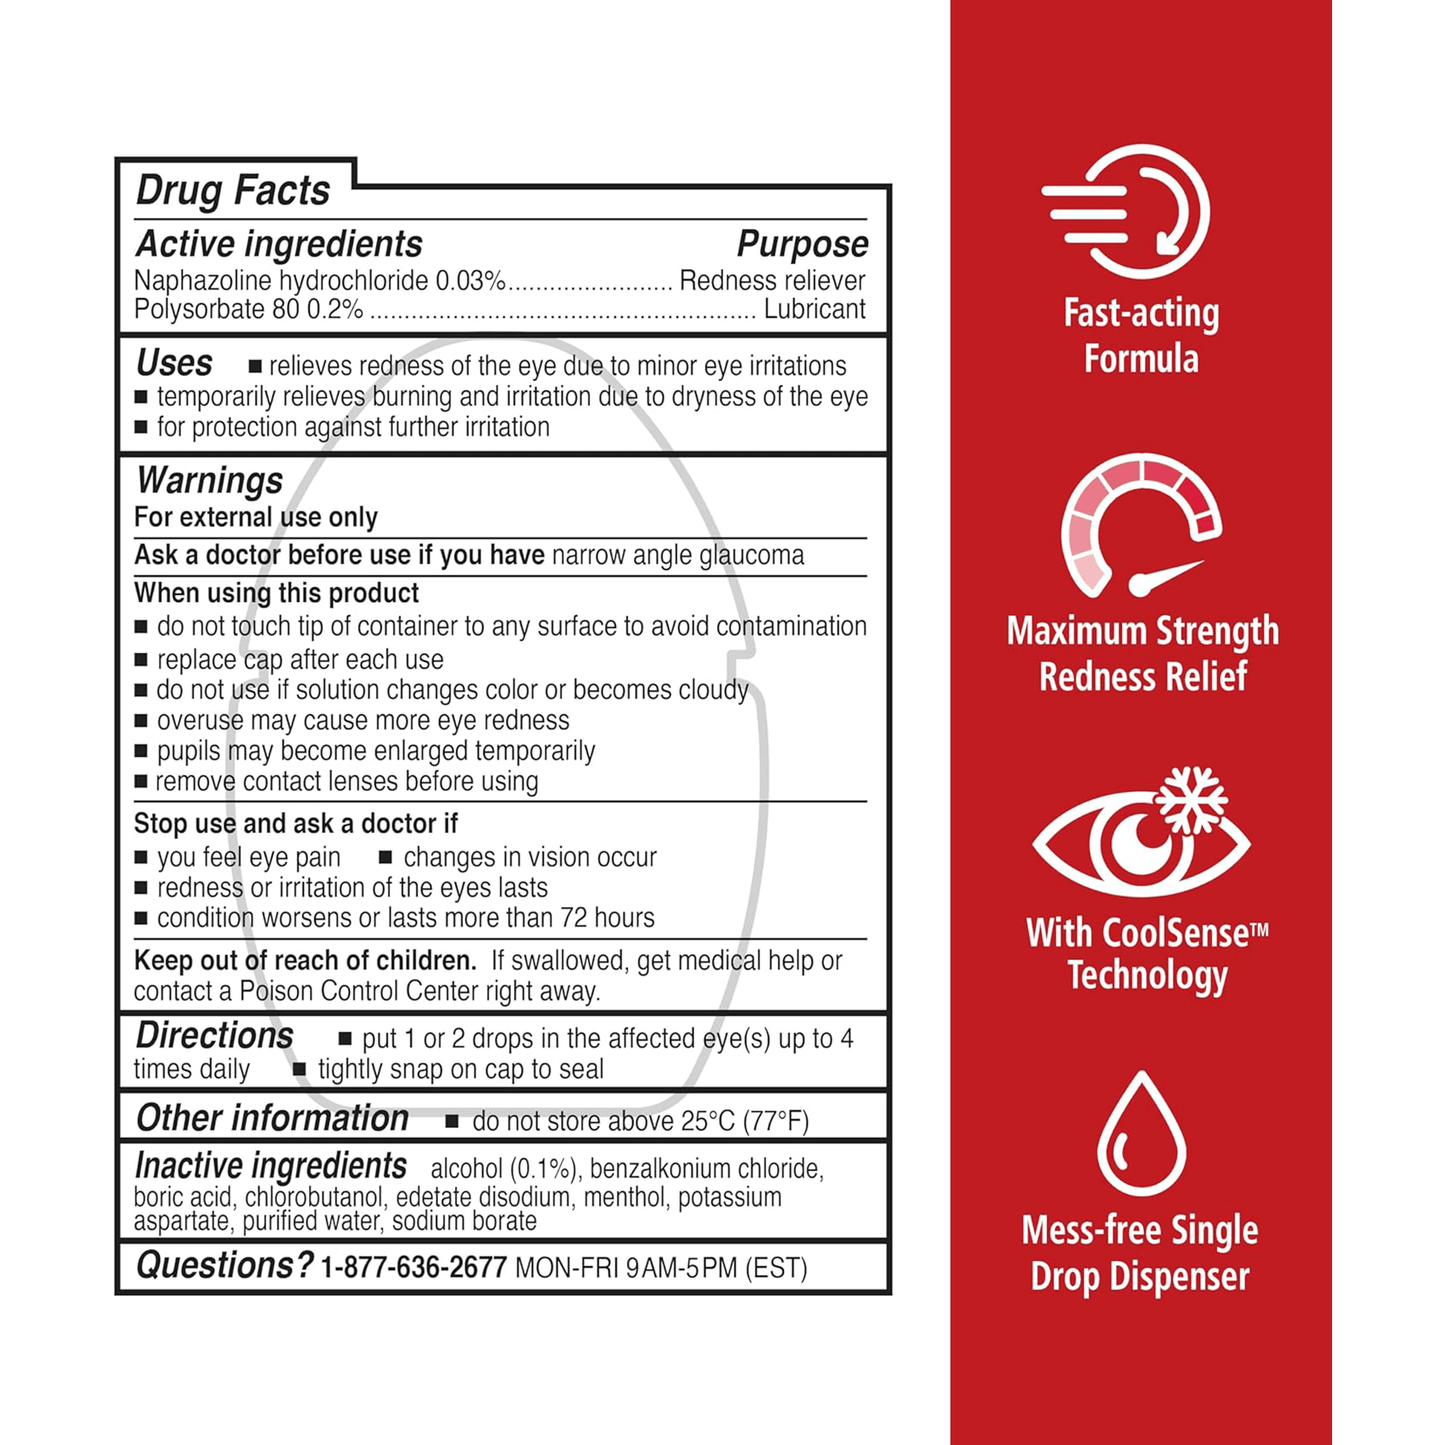 Rohto ®️ Cooling Eye Drops Max Strength • Eye Drops Against Red Eyes, Dry Eyes & Irritated Eyes • 1x13ml